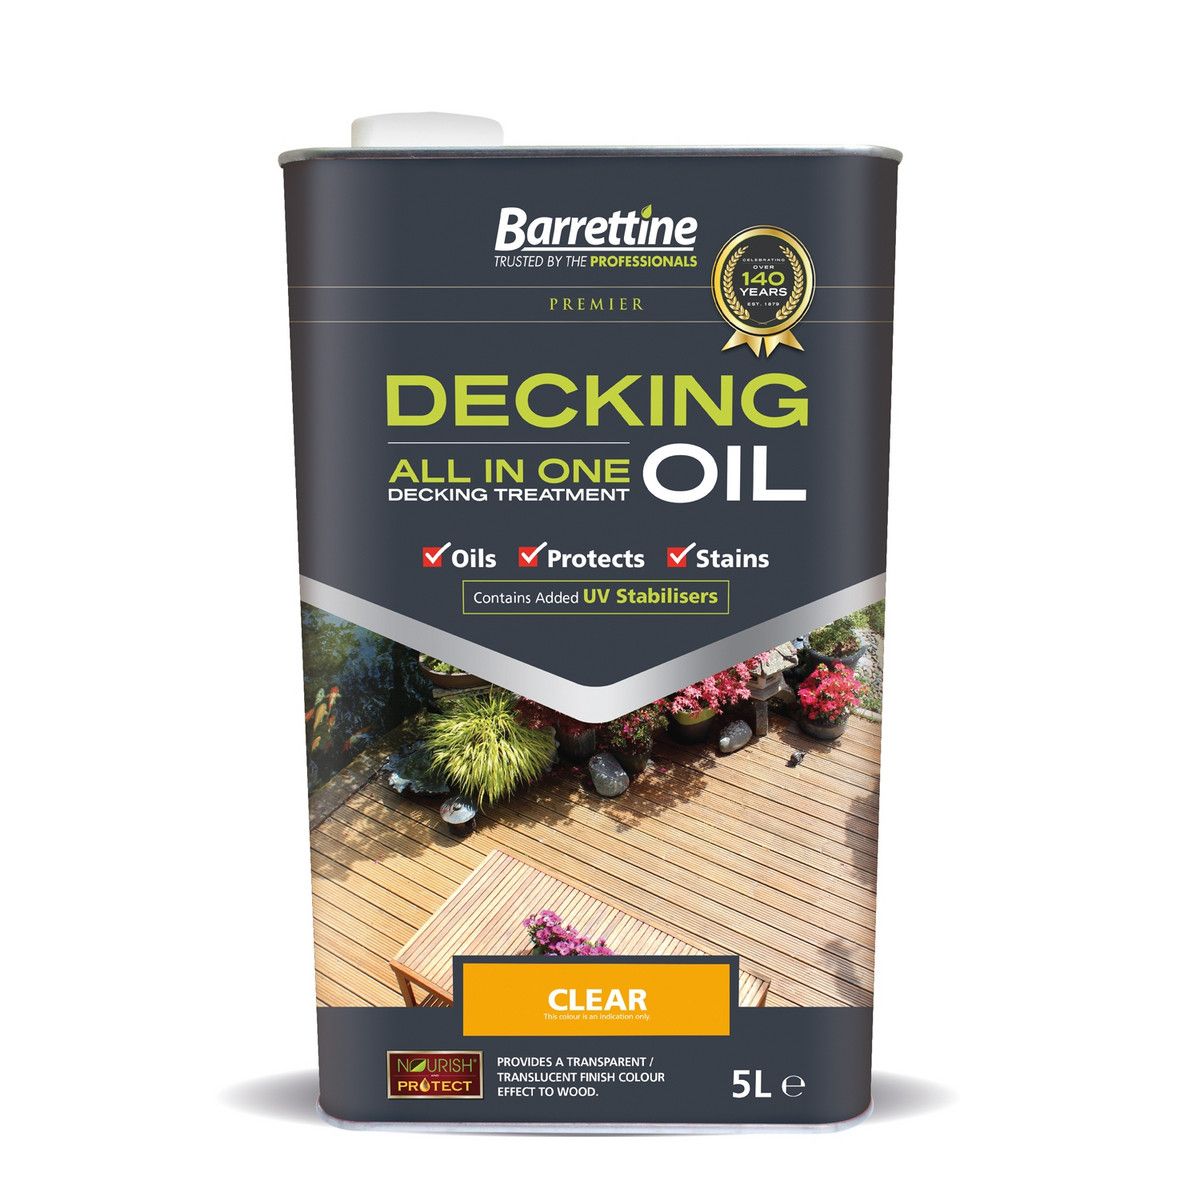 Decking Oil 2020-5L CL 1500x1500.jpg